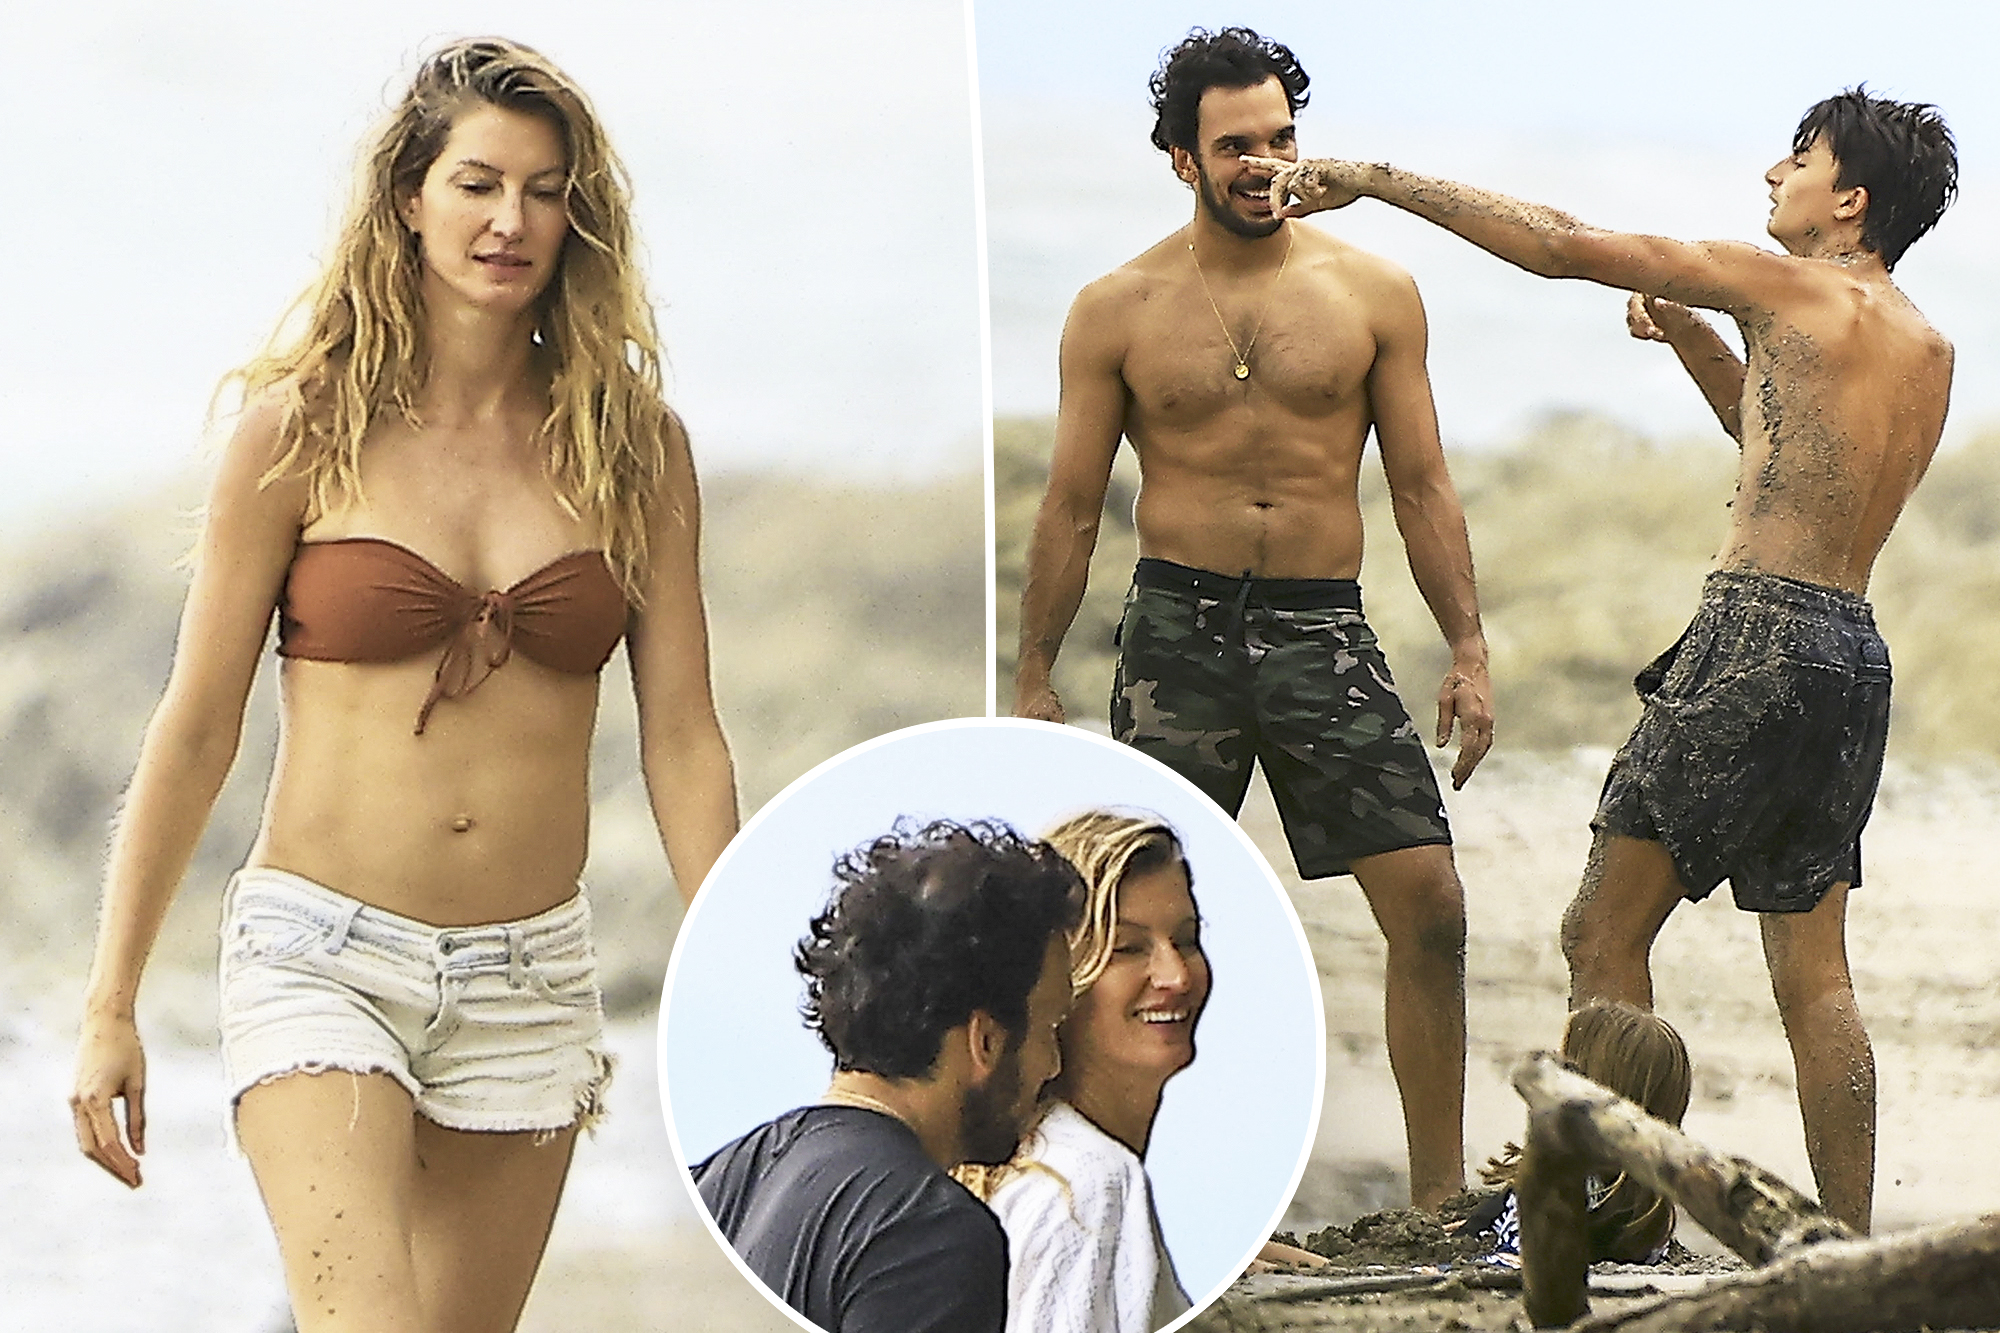 Gisele Bündchen's Beach Fun: Bikinis, Sandcastles, and Romance Revealed!